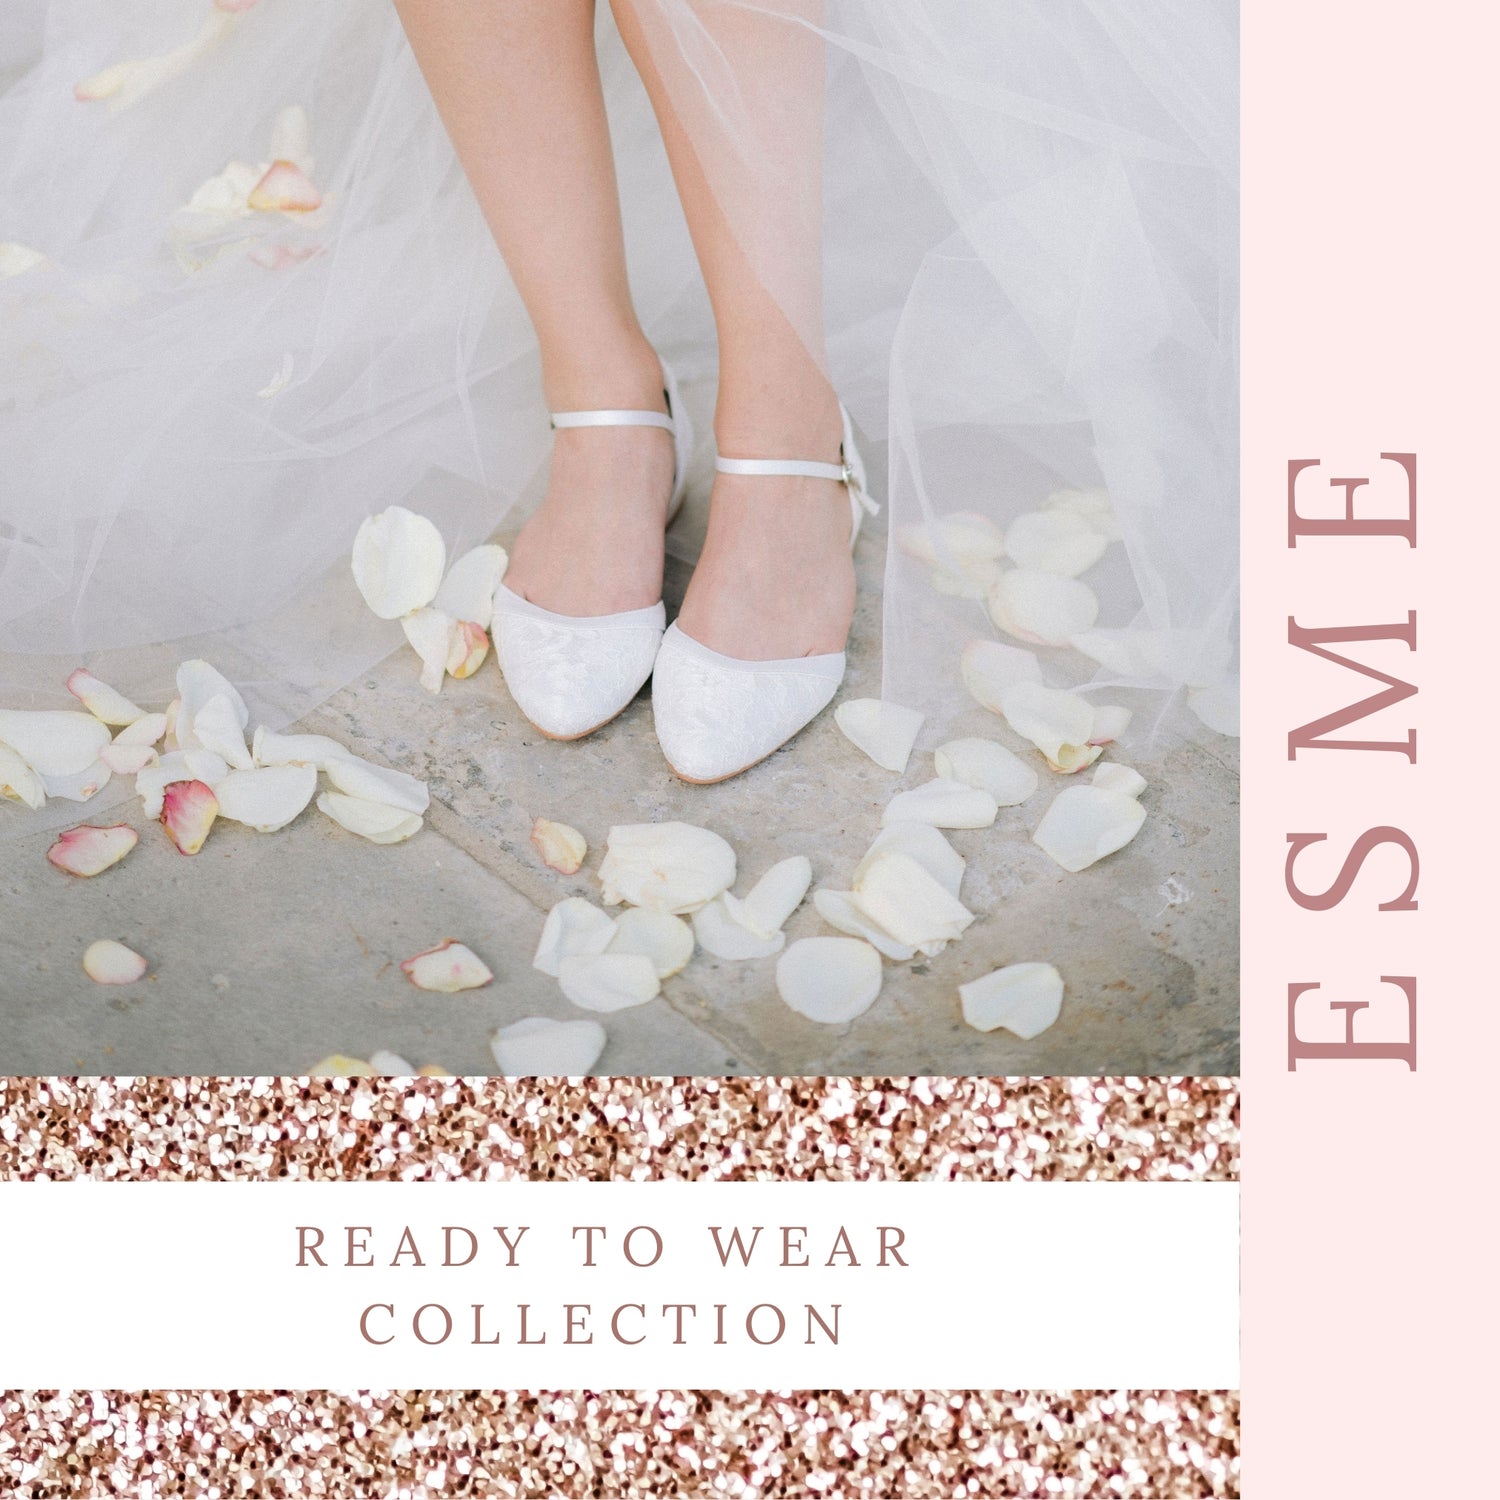 comfortable-wedding-shoes-low-heel